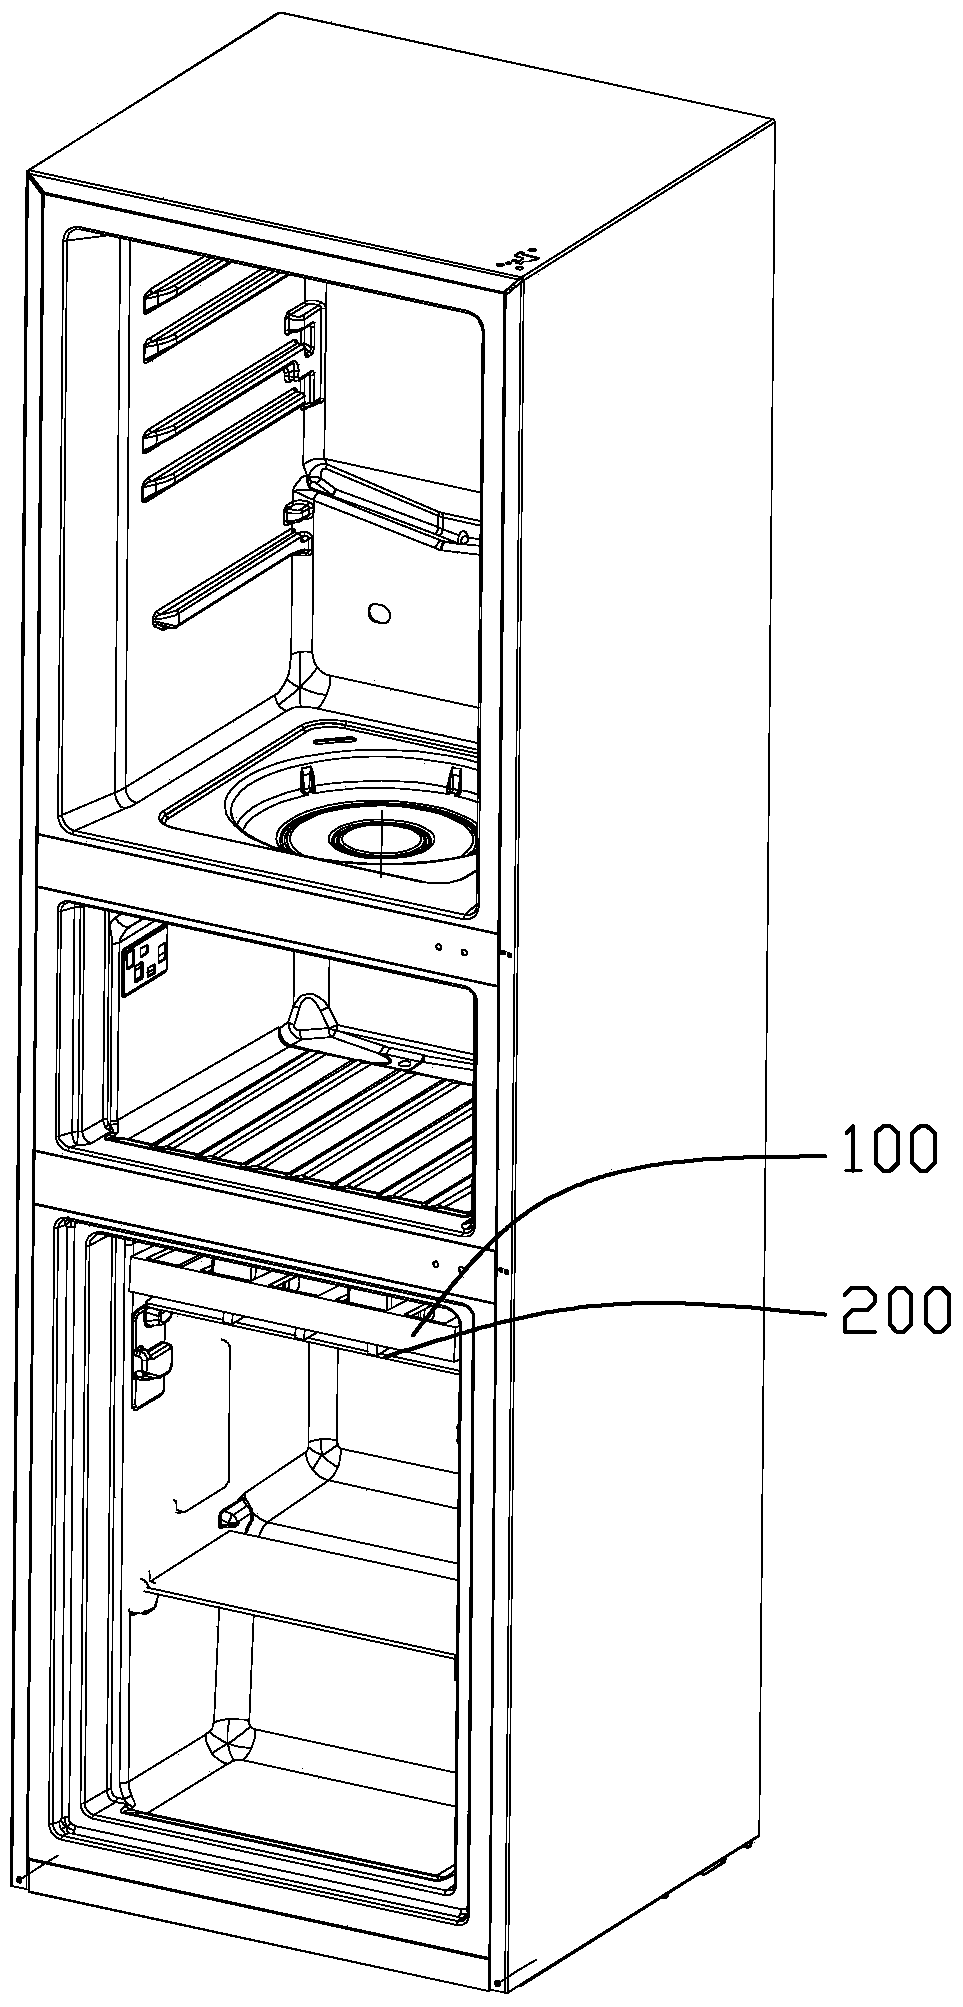 A refrigerator deicing device